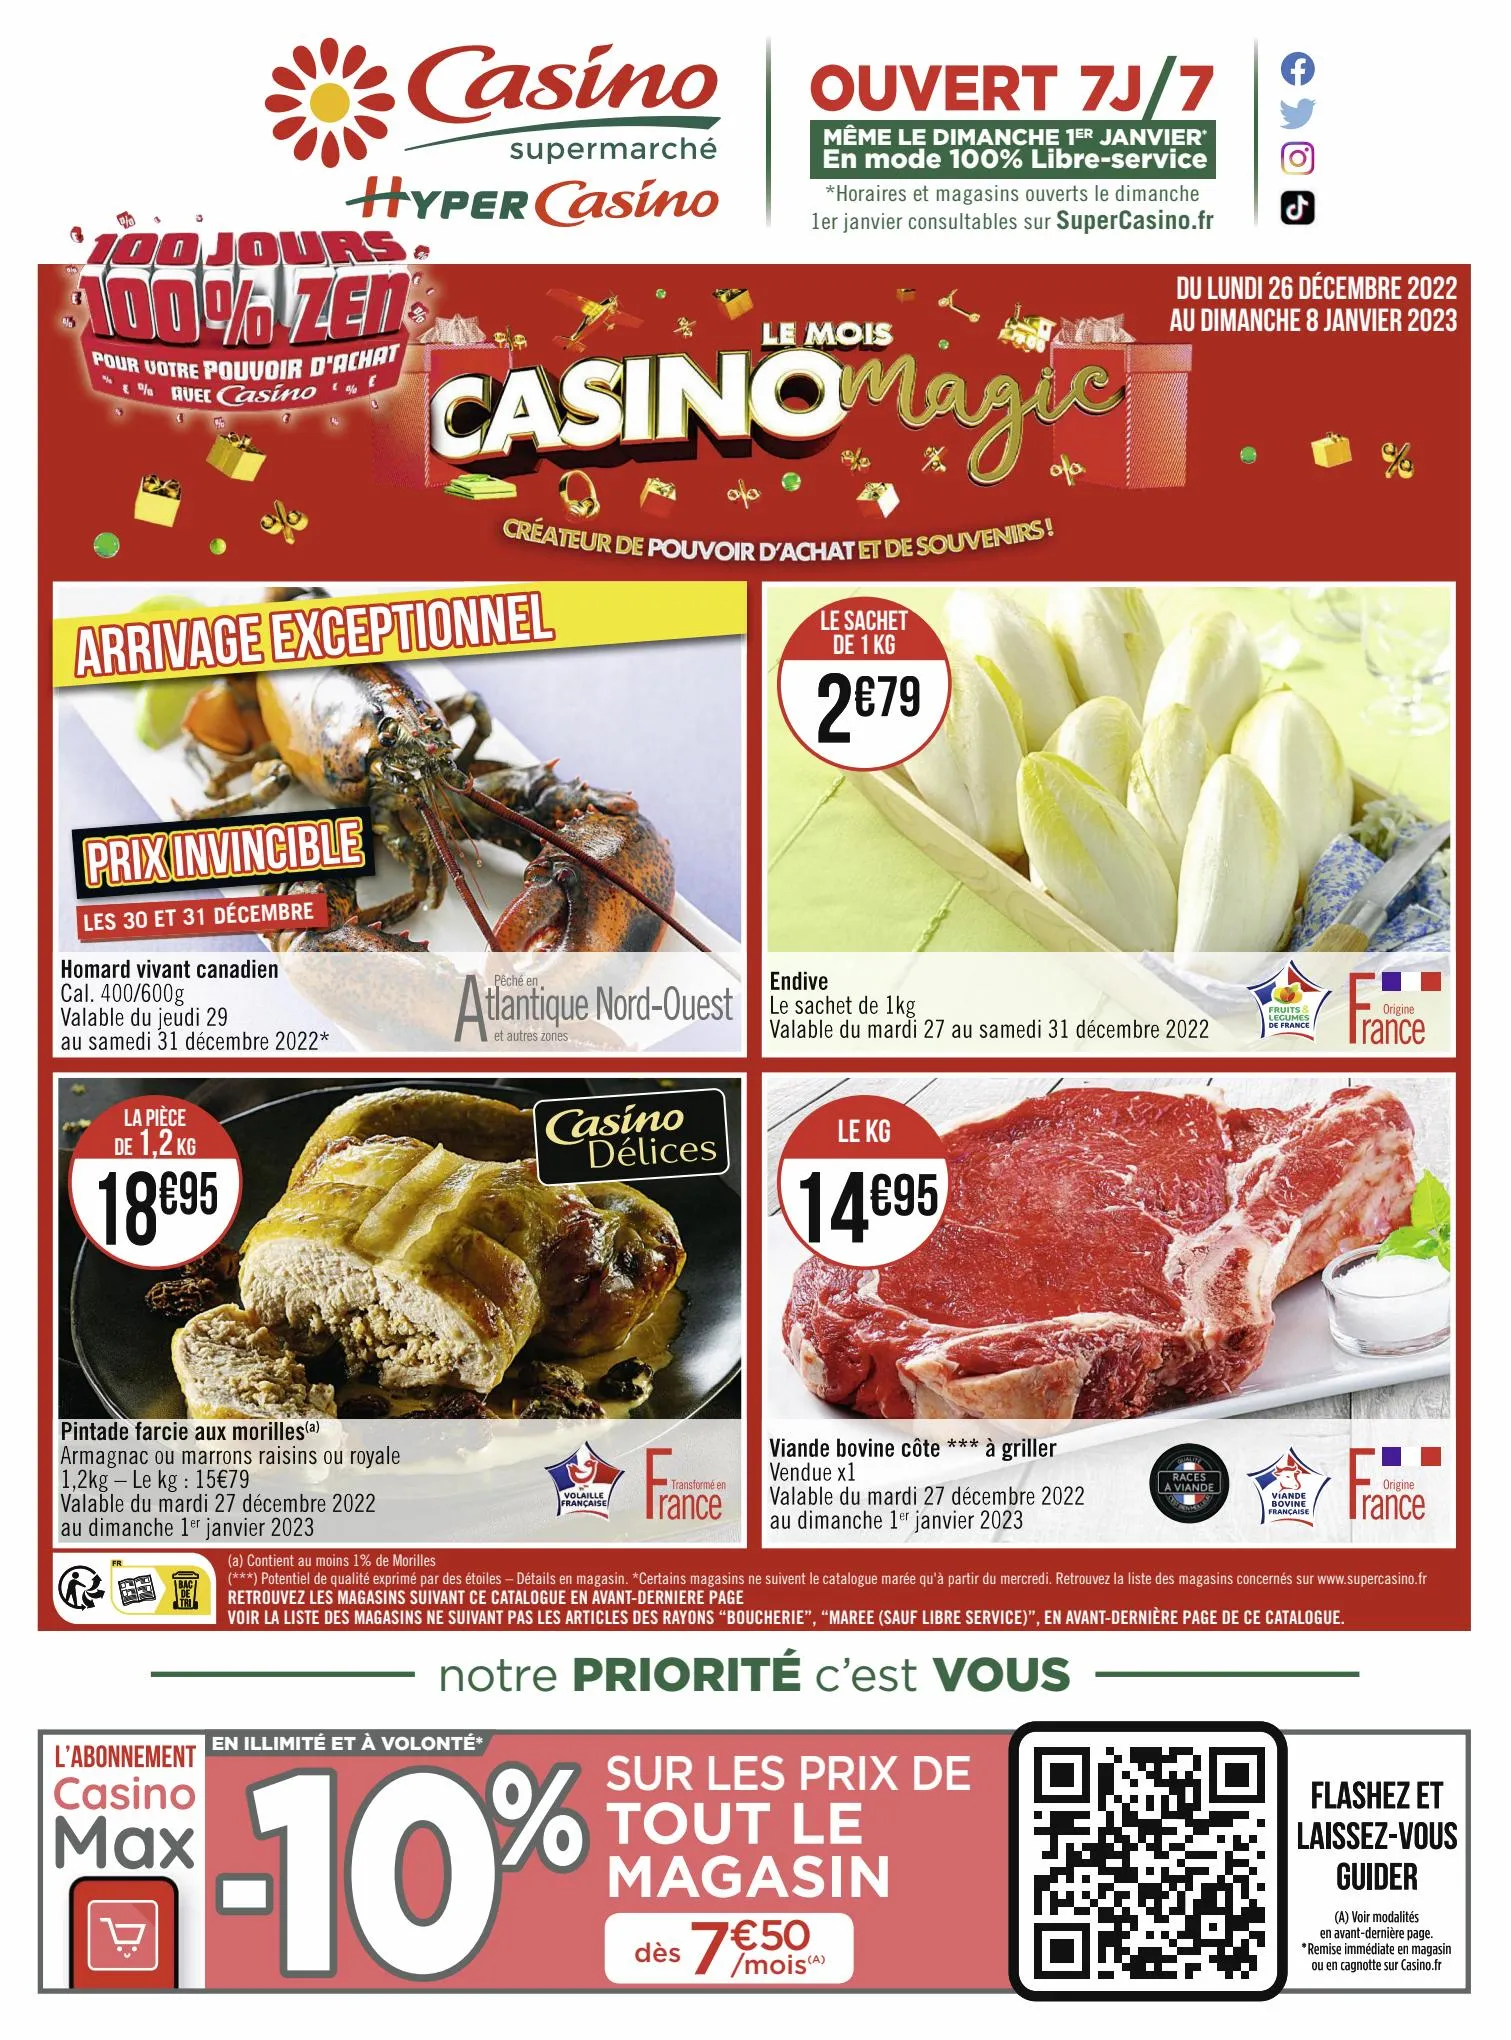 Catalogue Le mois Casino Magic, page 00012